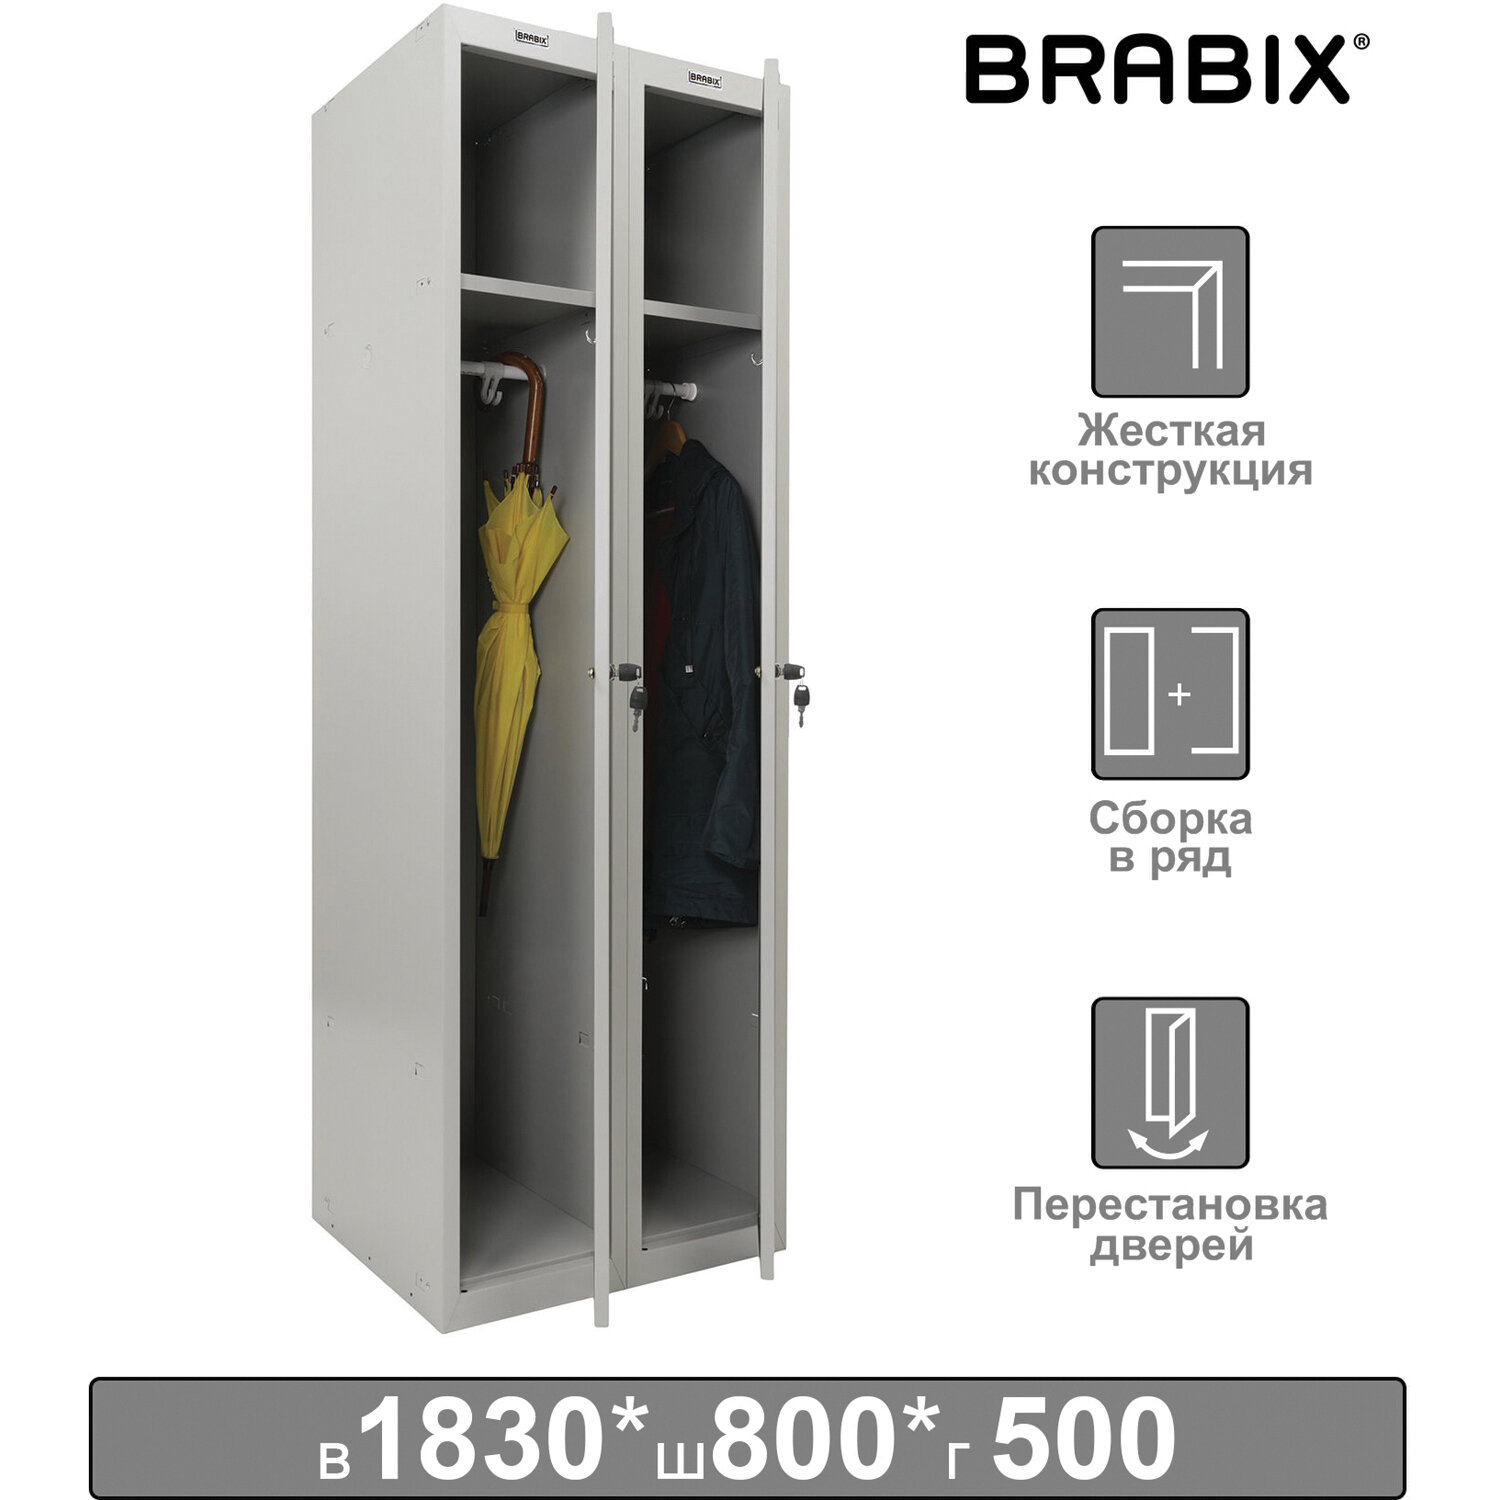 Brabix     BRABIX LK 21-80, , 2 , 1830800500 , 37 , 291129, S230BR406102